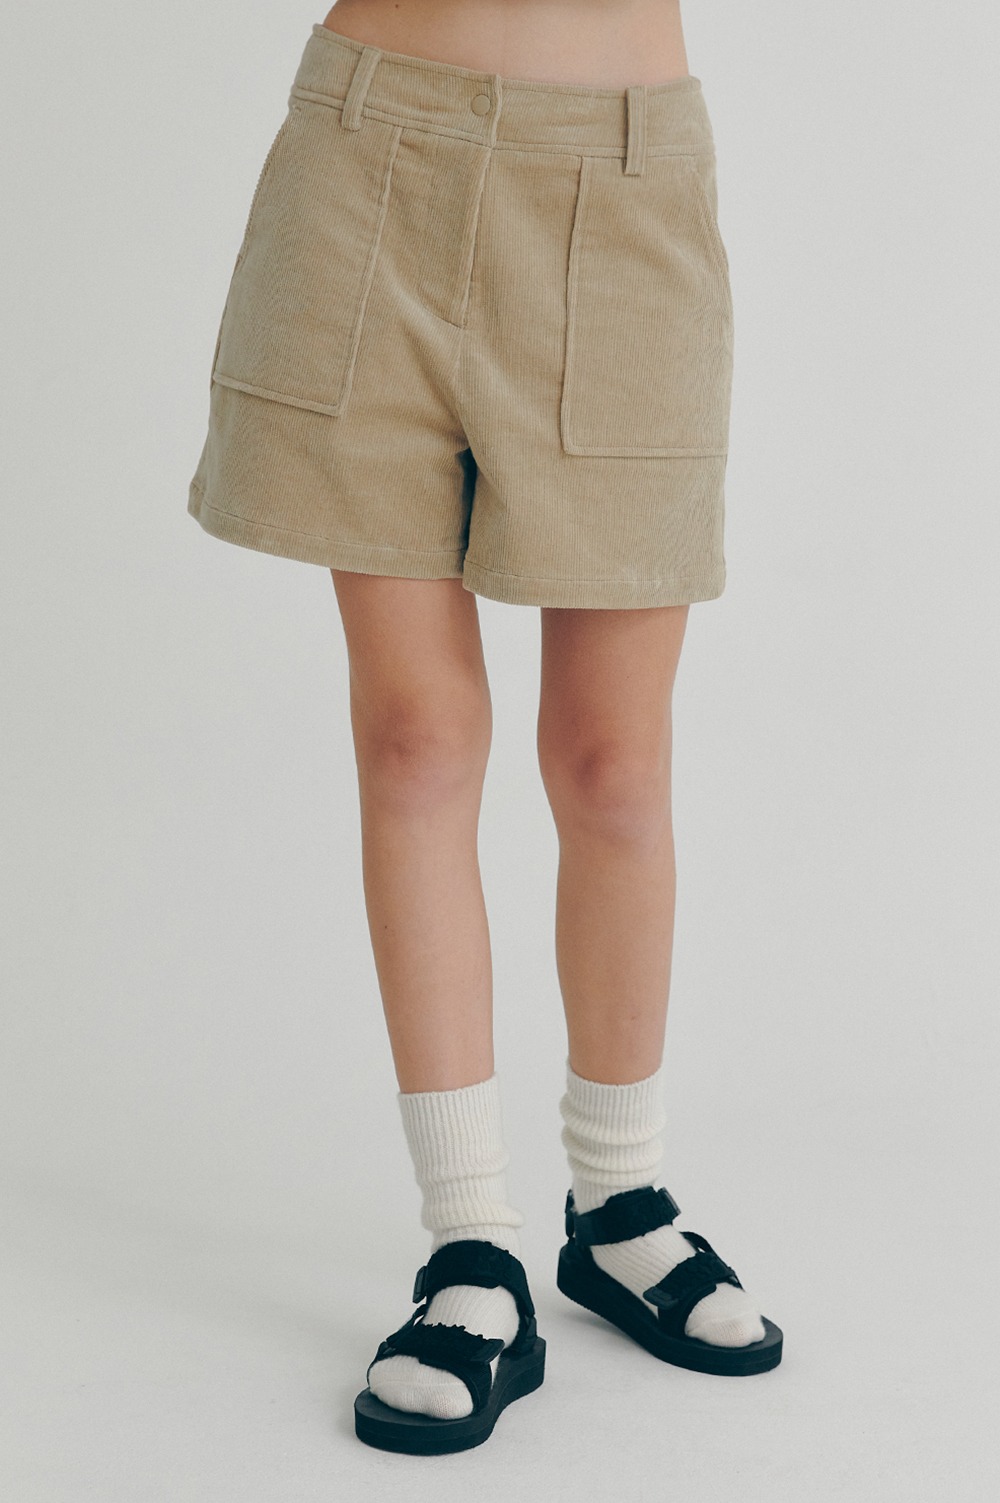 clove - [22FW clove] Corduroy Shorts (Beige)